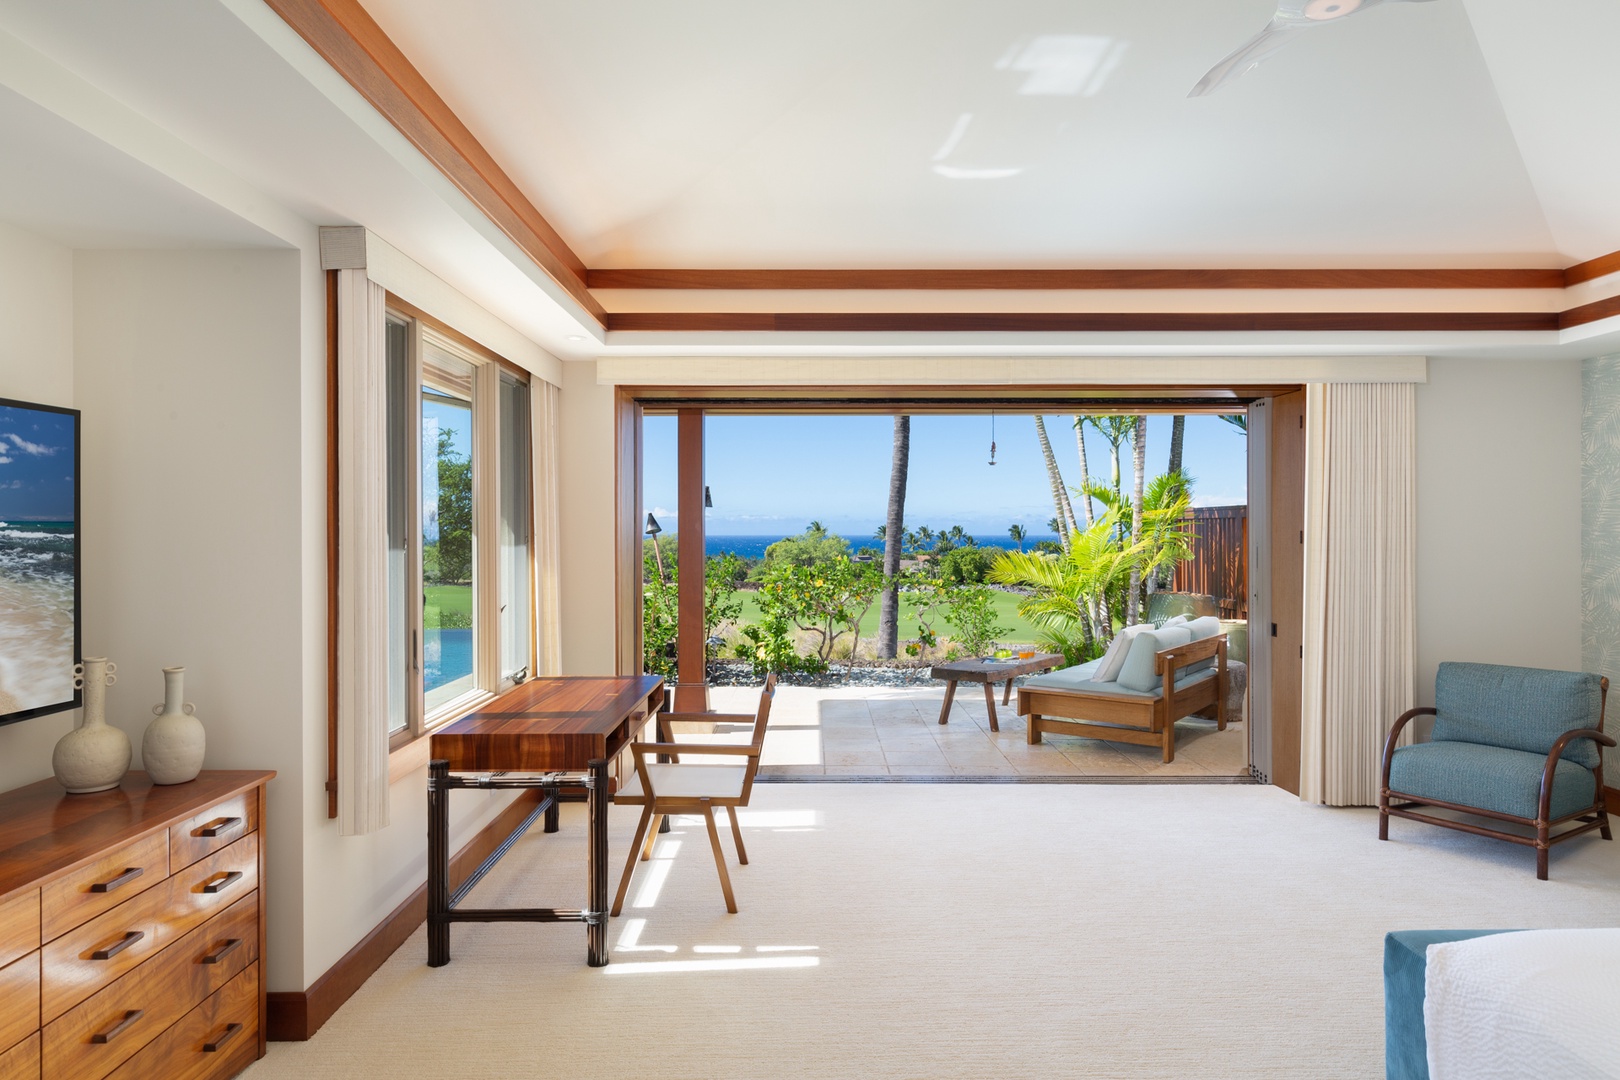 Kailua Kona Vacation Rentals, 4BD Hainoa Estate (102) at Four Seasons Resort at Hualalai - View towards the furnished lanai from the Primary bedroom